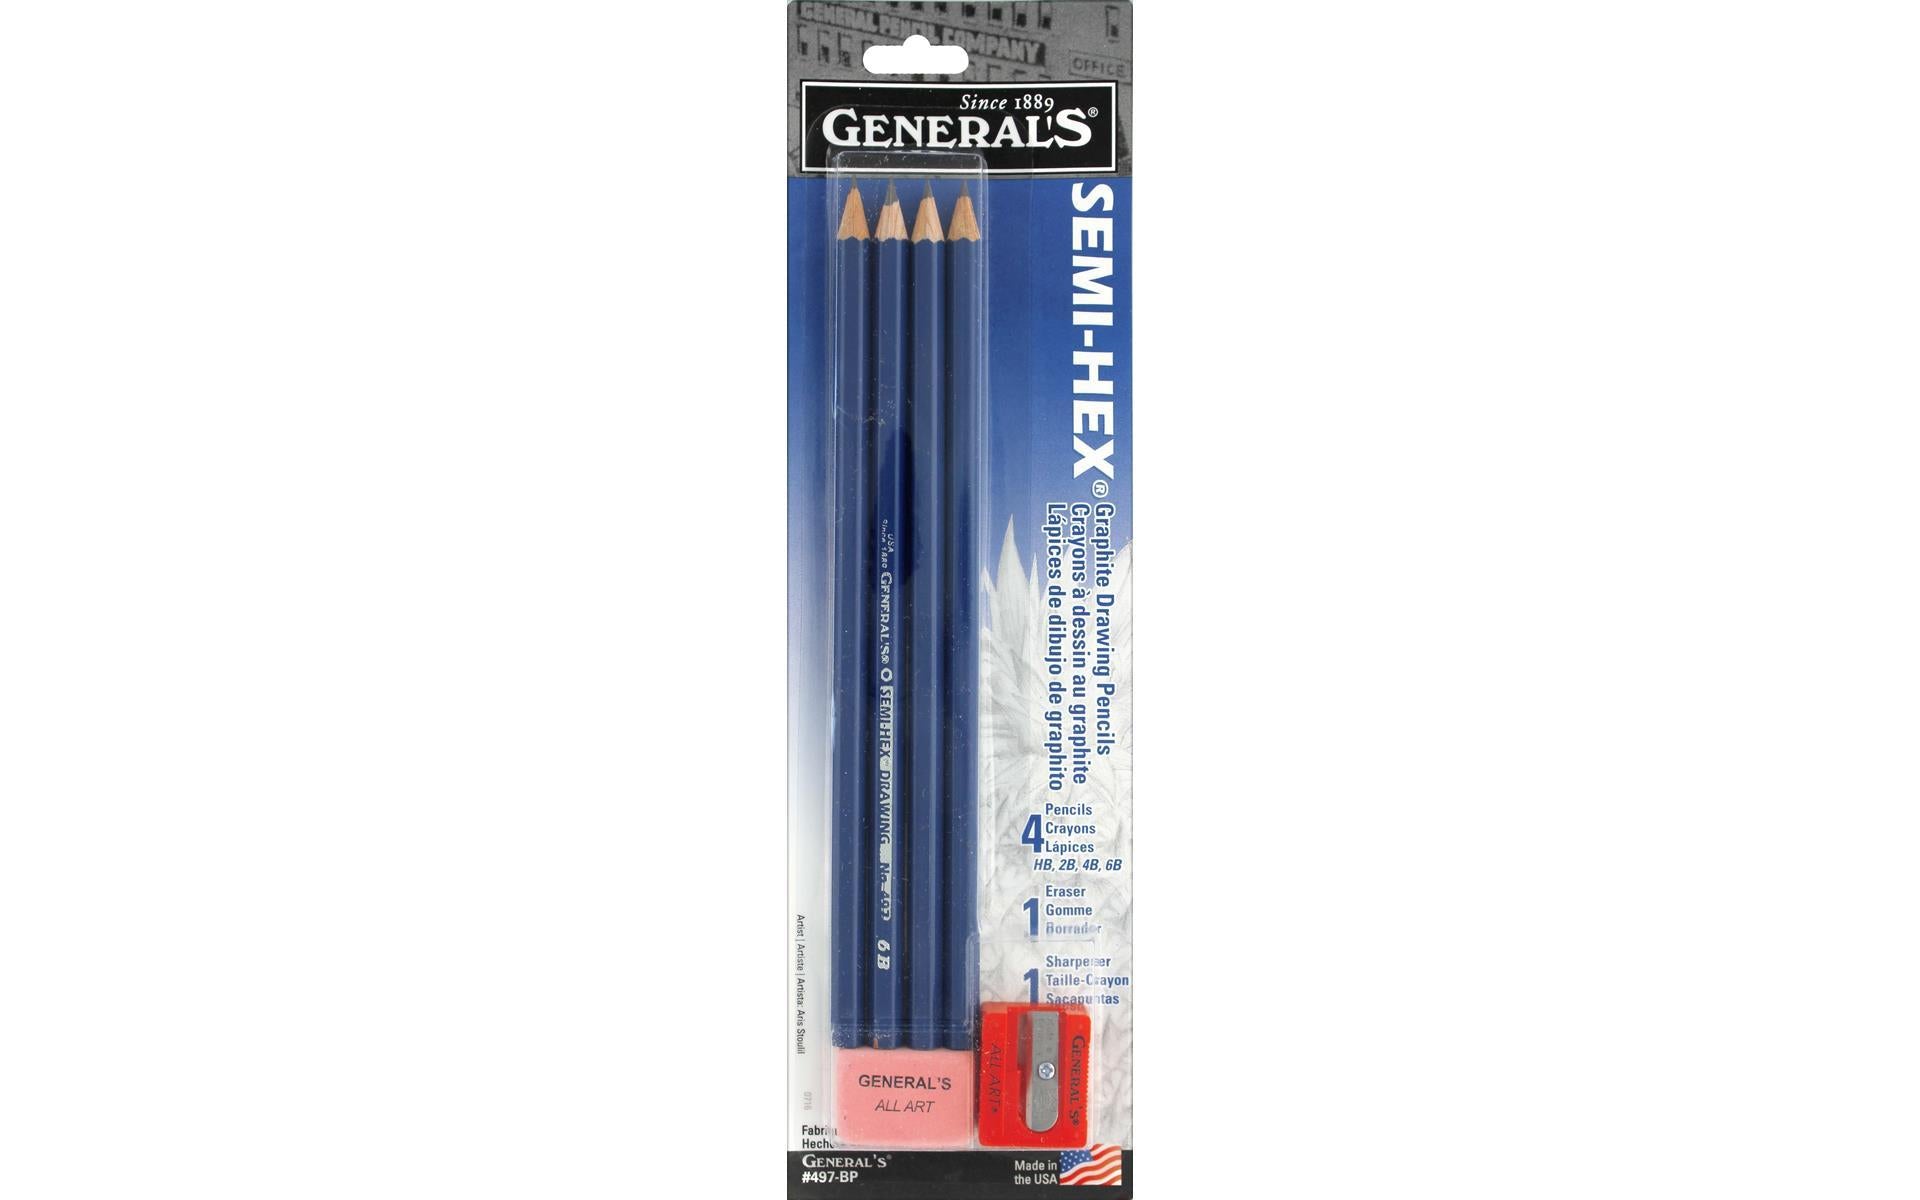 General's #10 Drawing Pencil Kit